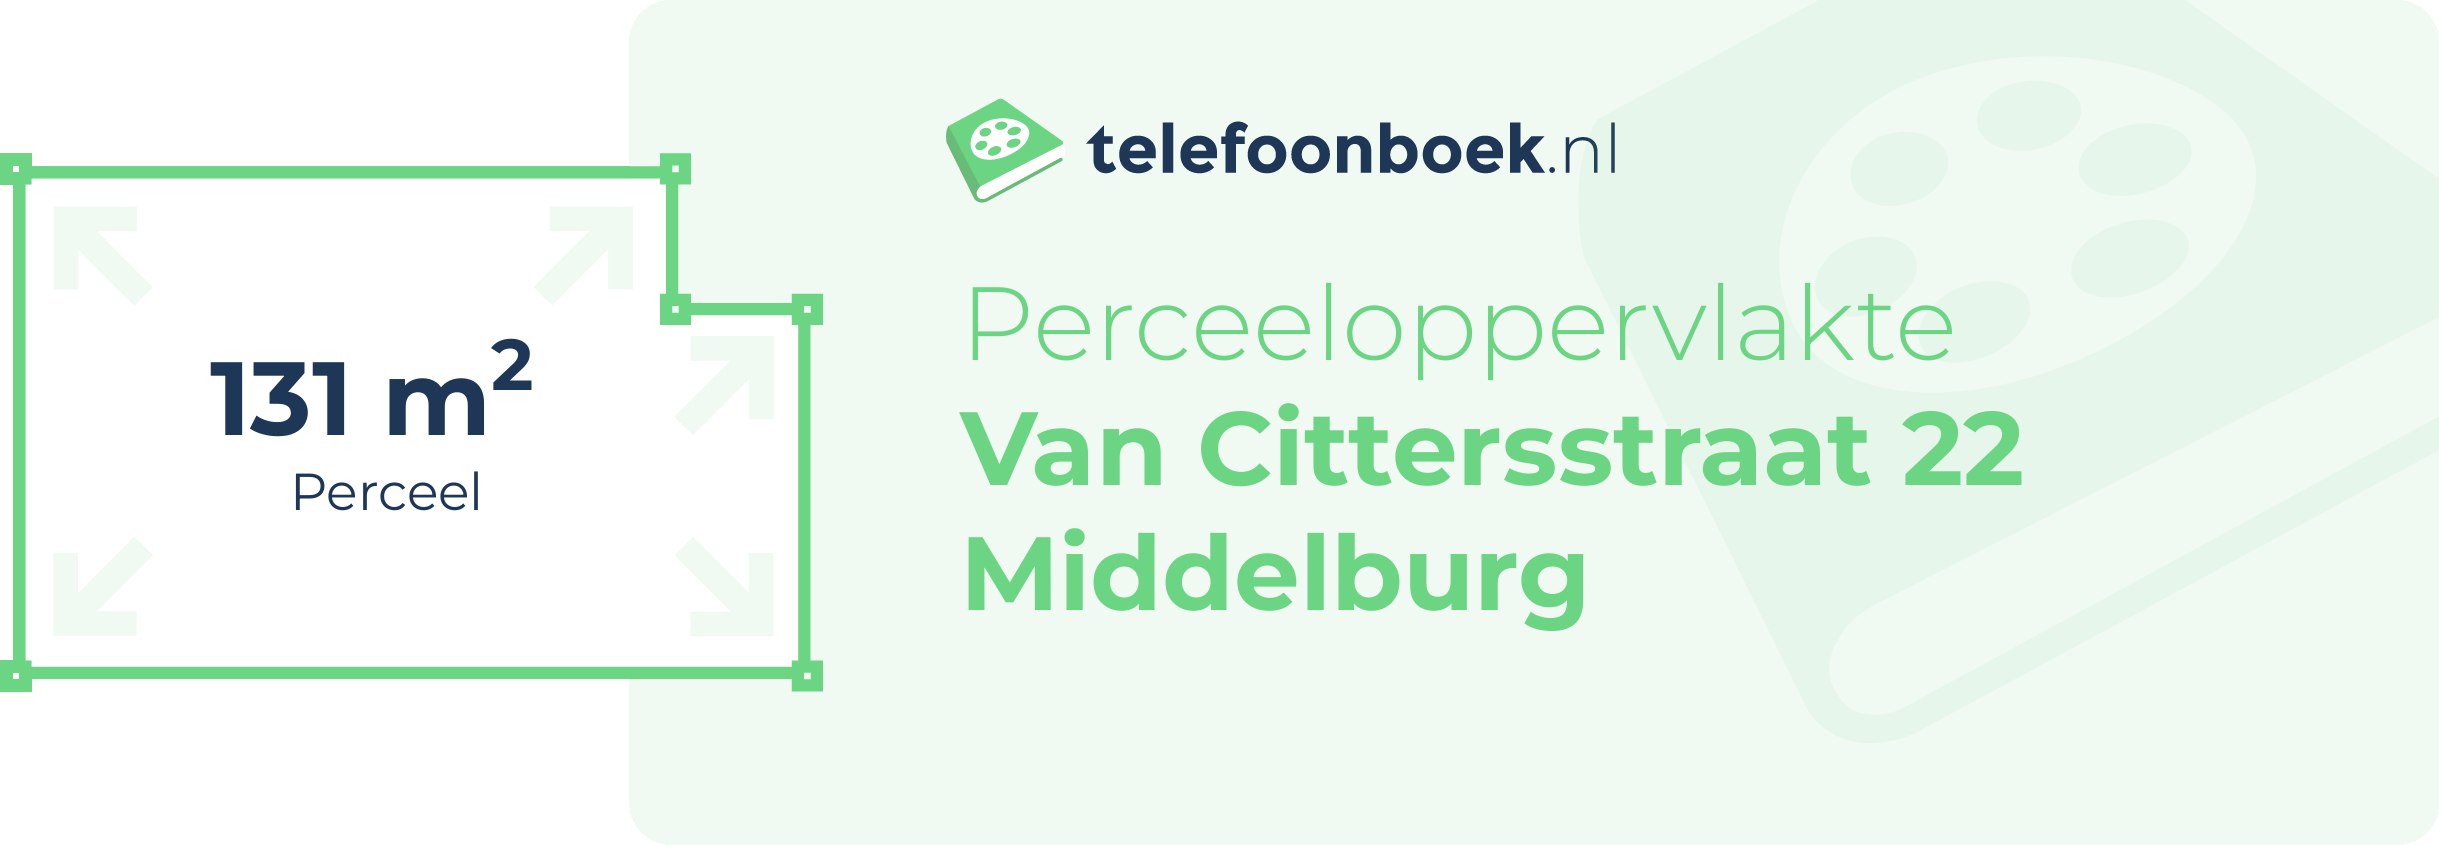 Perceeloppervlakte Van Cittersstraat 22 Middelburg